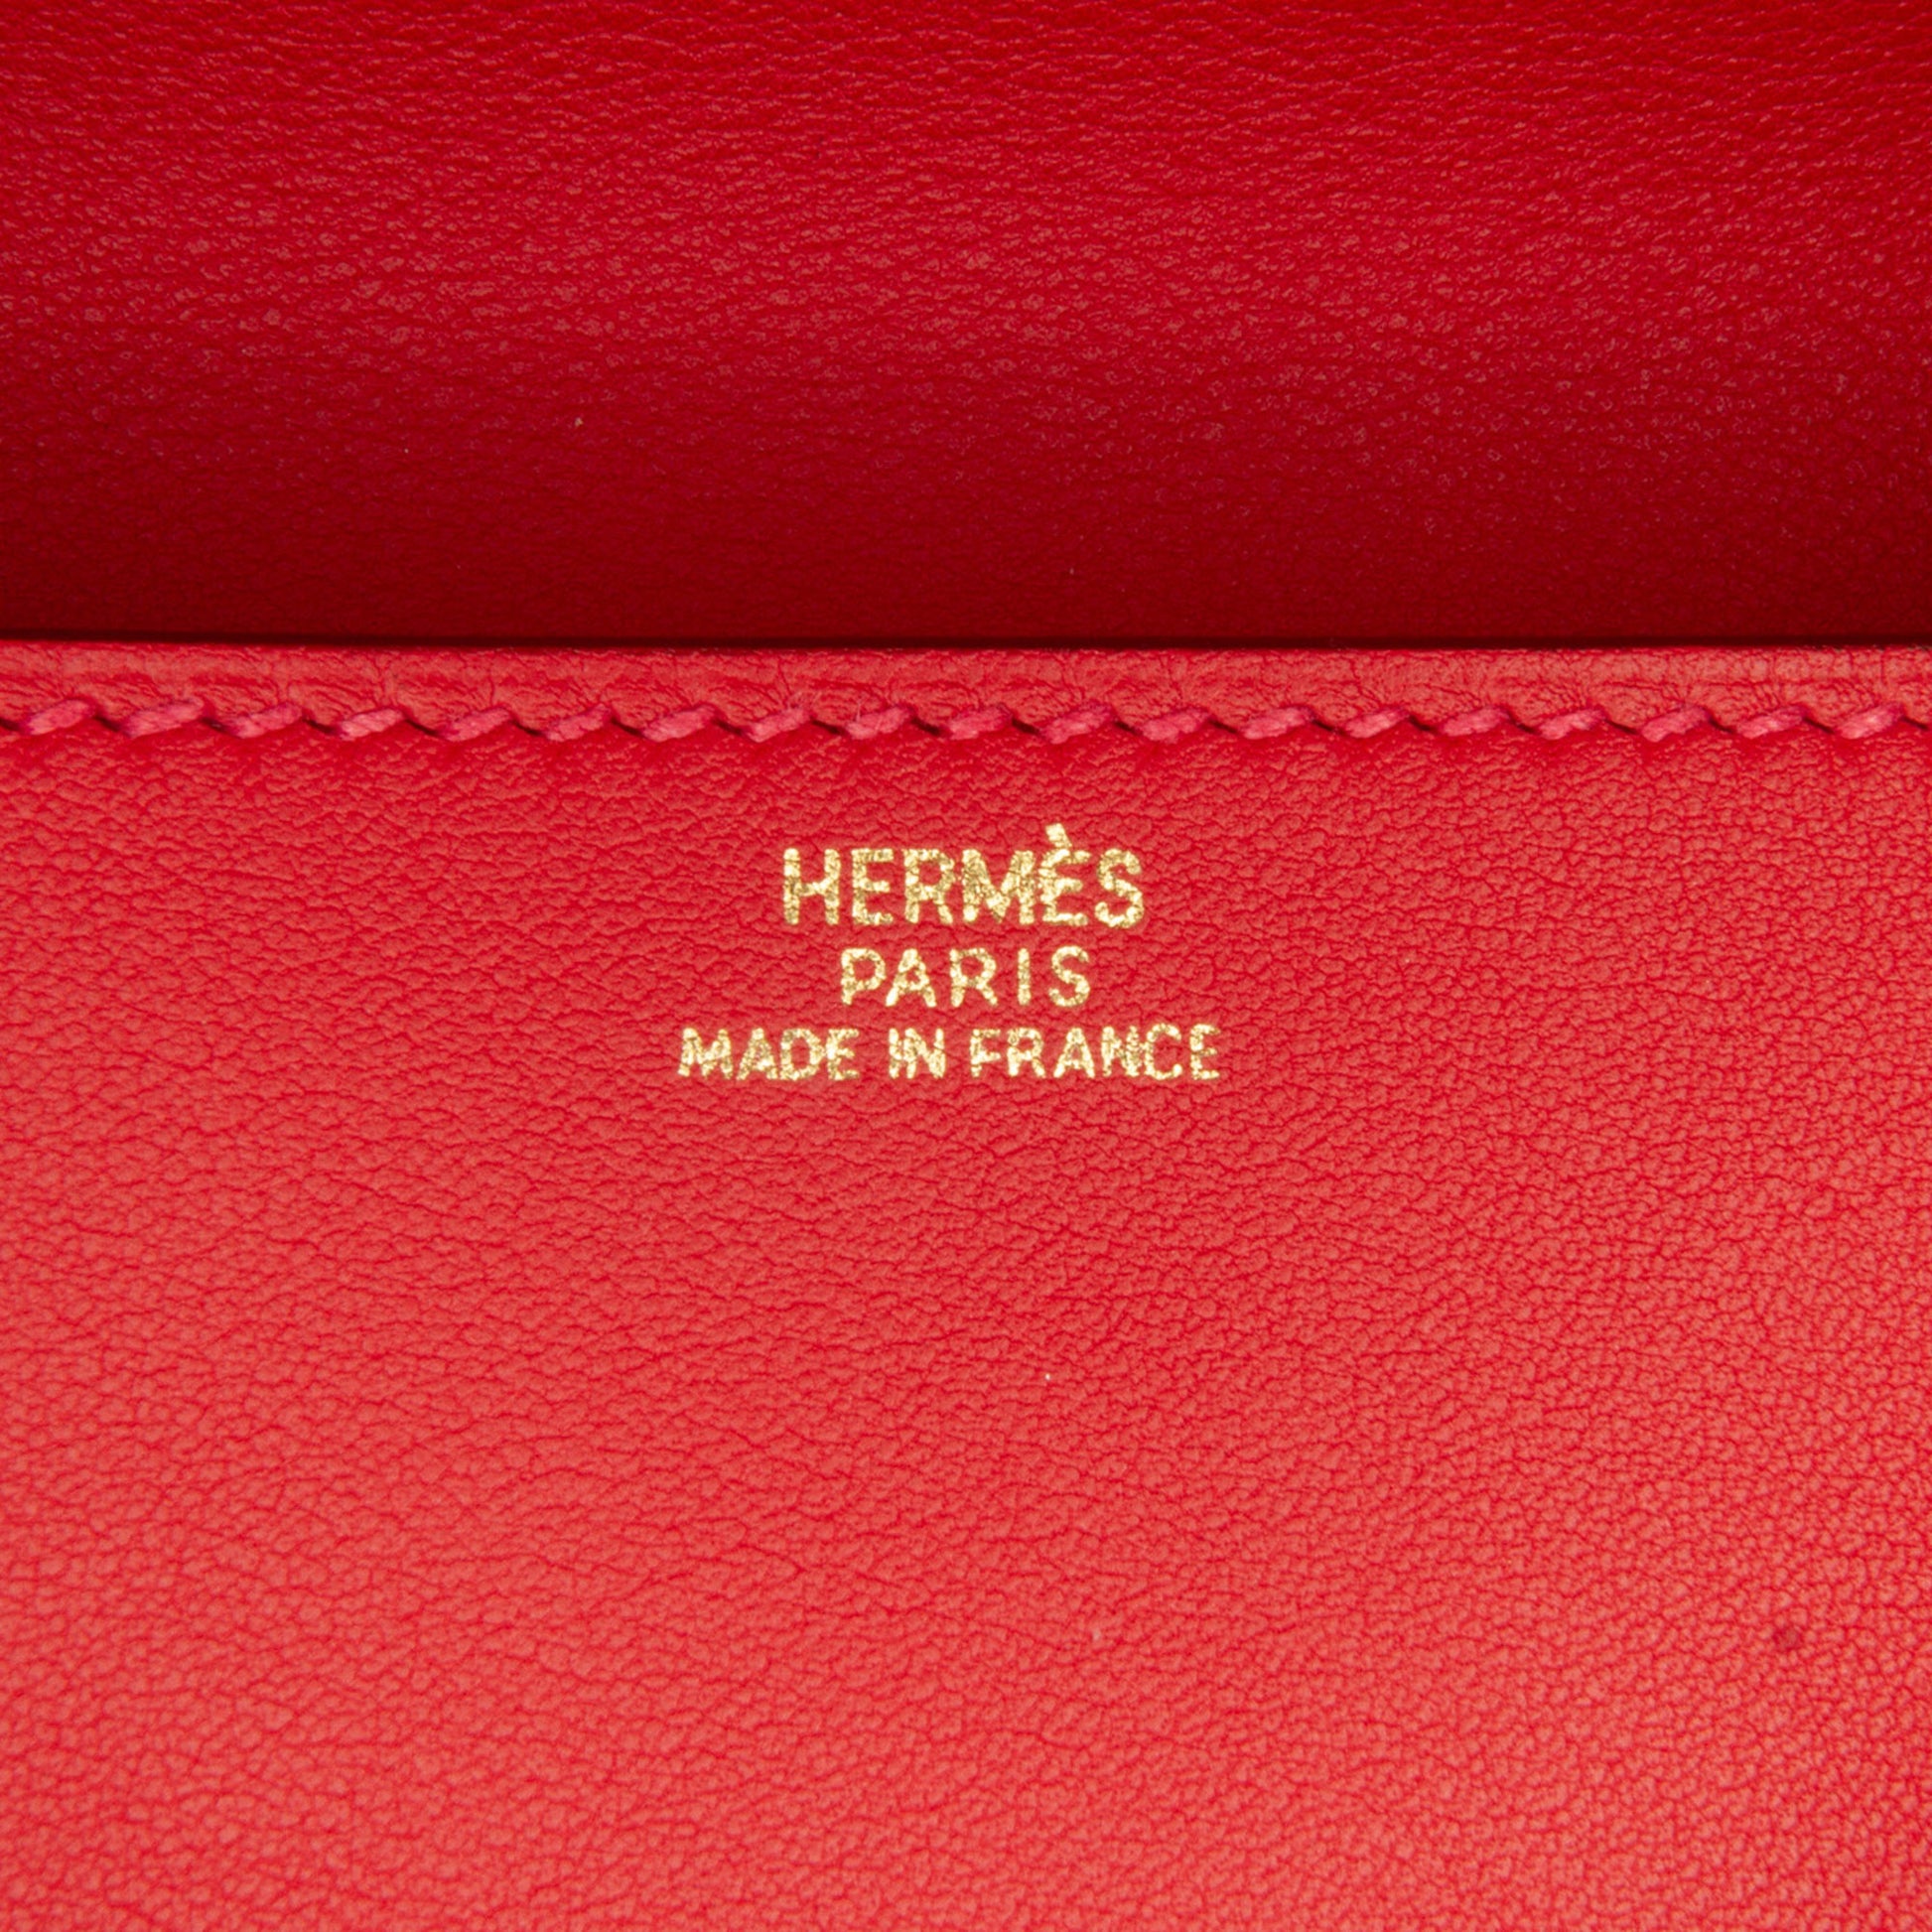 Medor Leather Clutch Bag Red - Gaby Paris